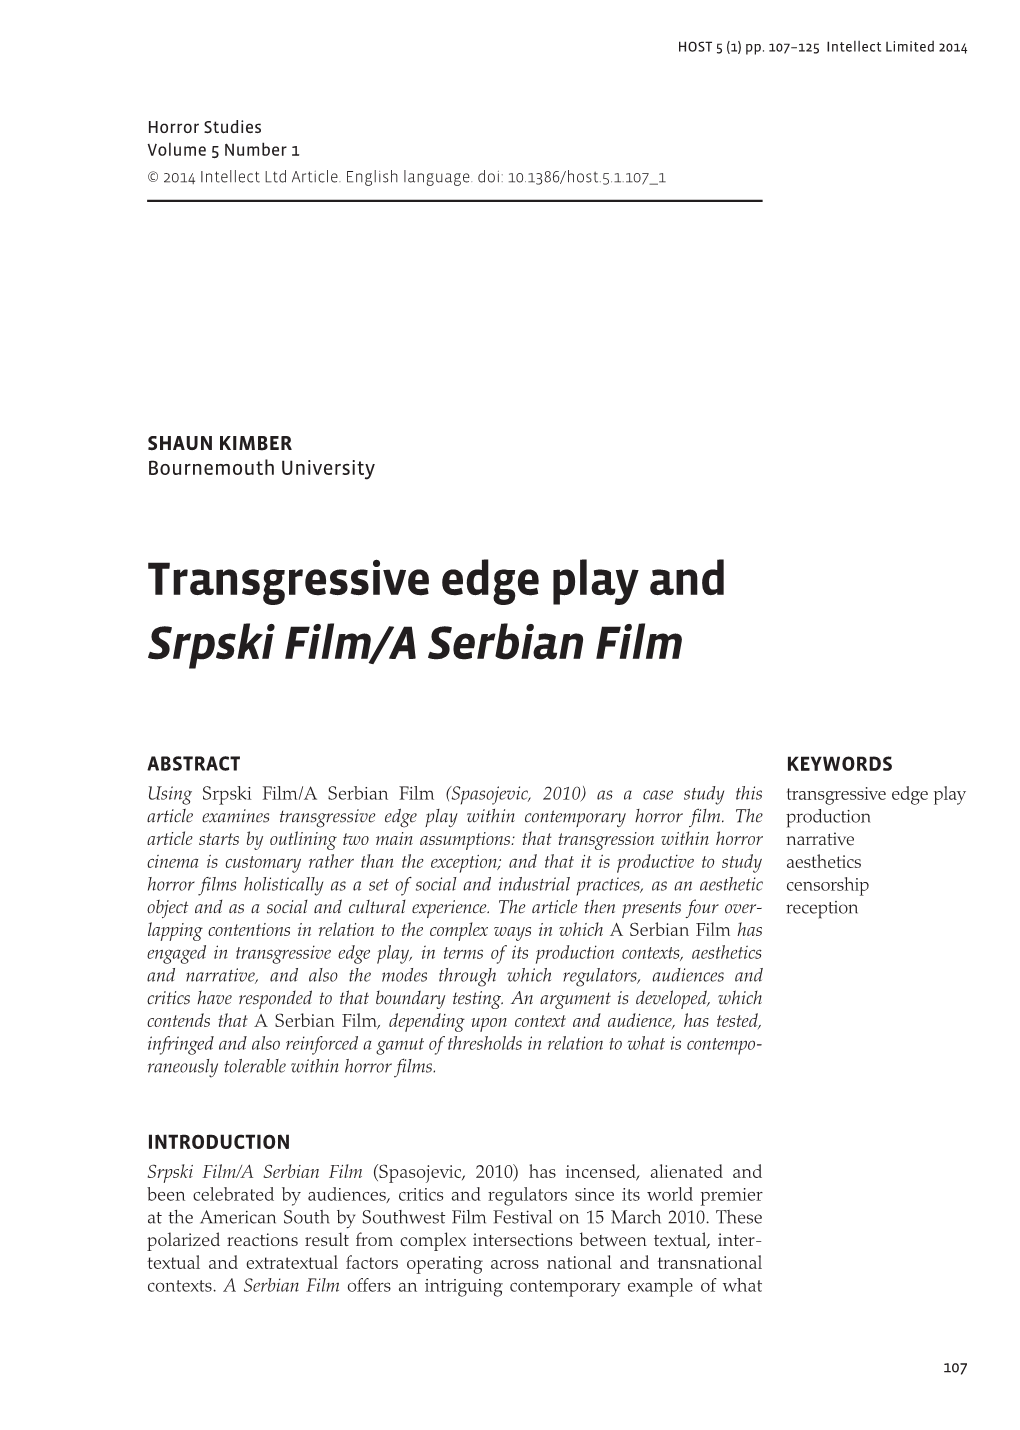 Transgressive Edge Play and Srpski Film/A Serbian Film